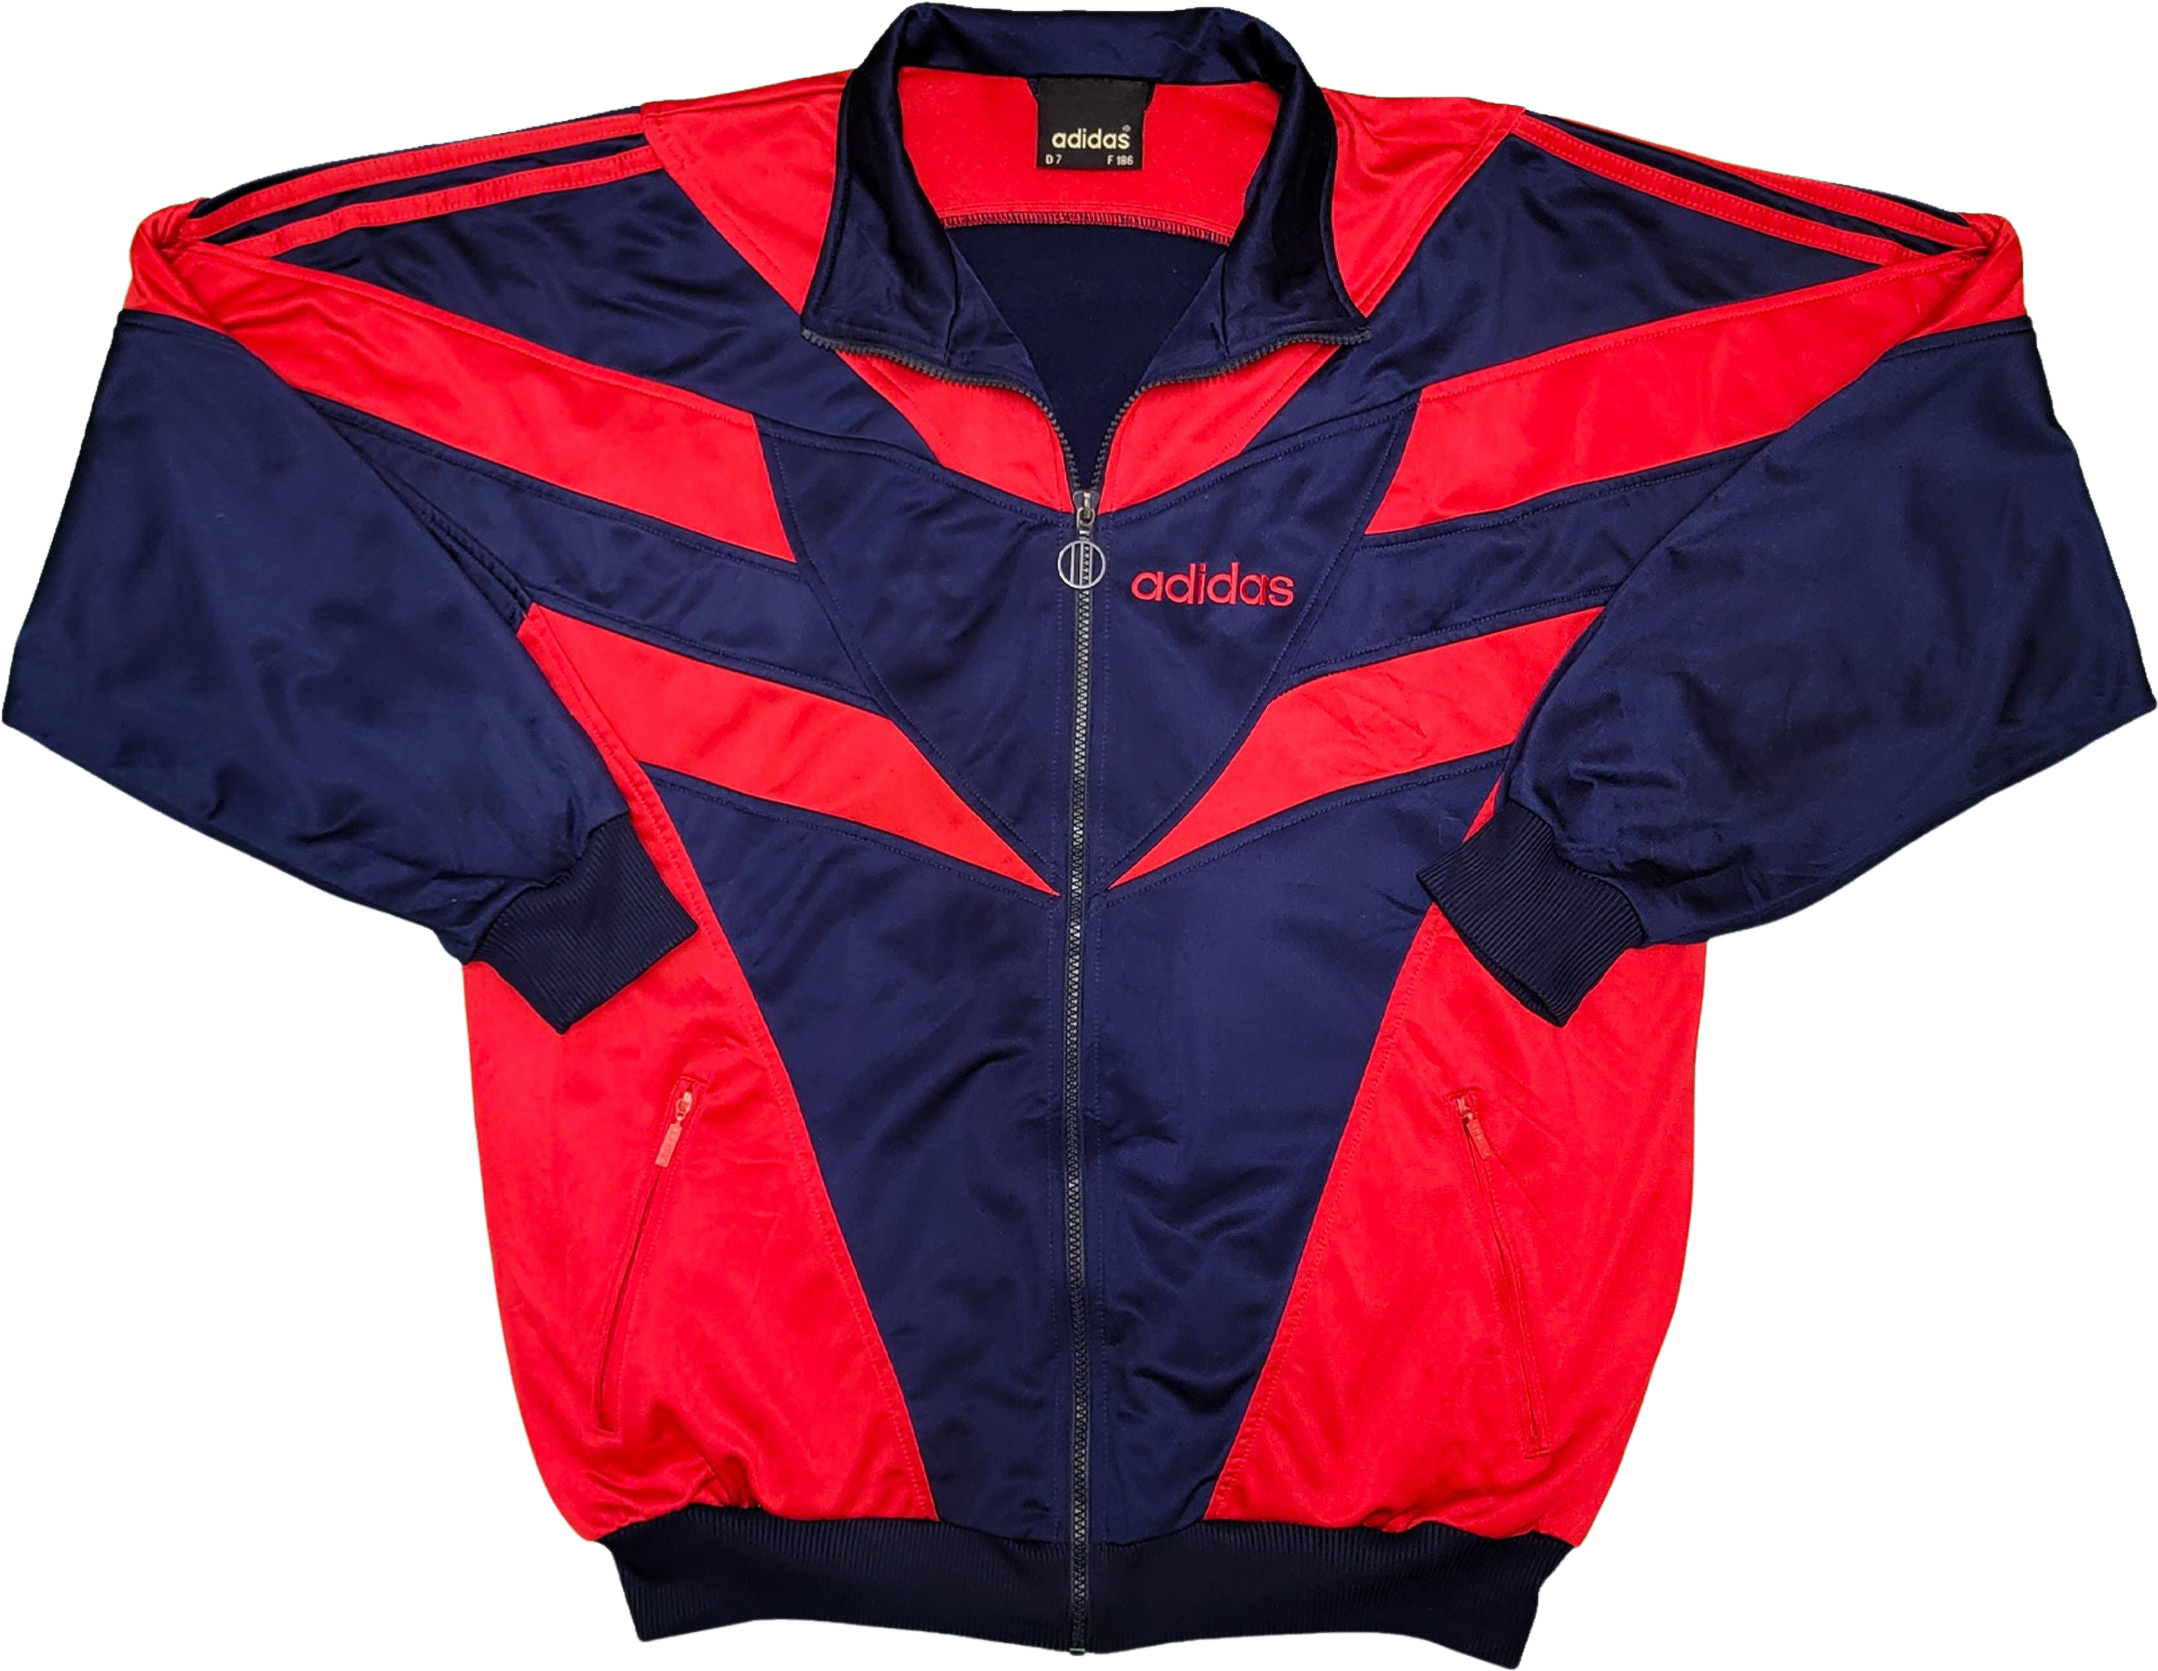 la seguridad popurrí empujoncito Adidas Vintage 90s Colorblock Track Jacket Red and Navy Blue Stitched |  Shop THRILLING